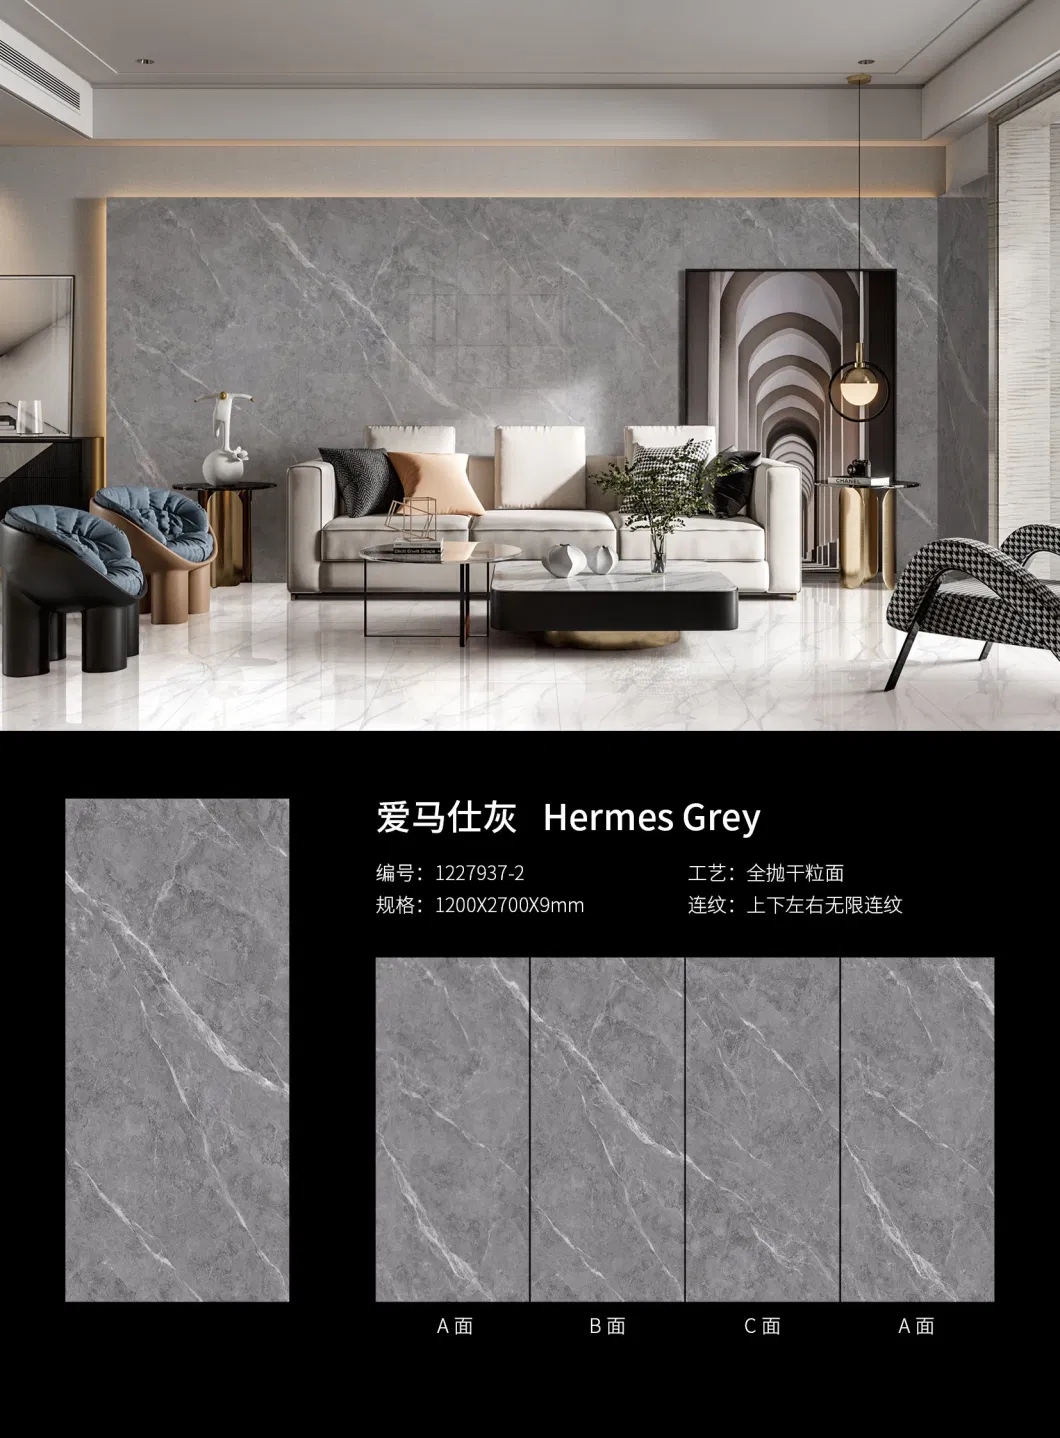 Foshan New Hot Sintered Stone 1200X2700X9mm Glazed Bathroom Interior Floor Wall Tile